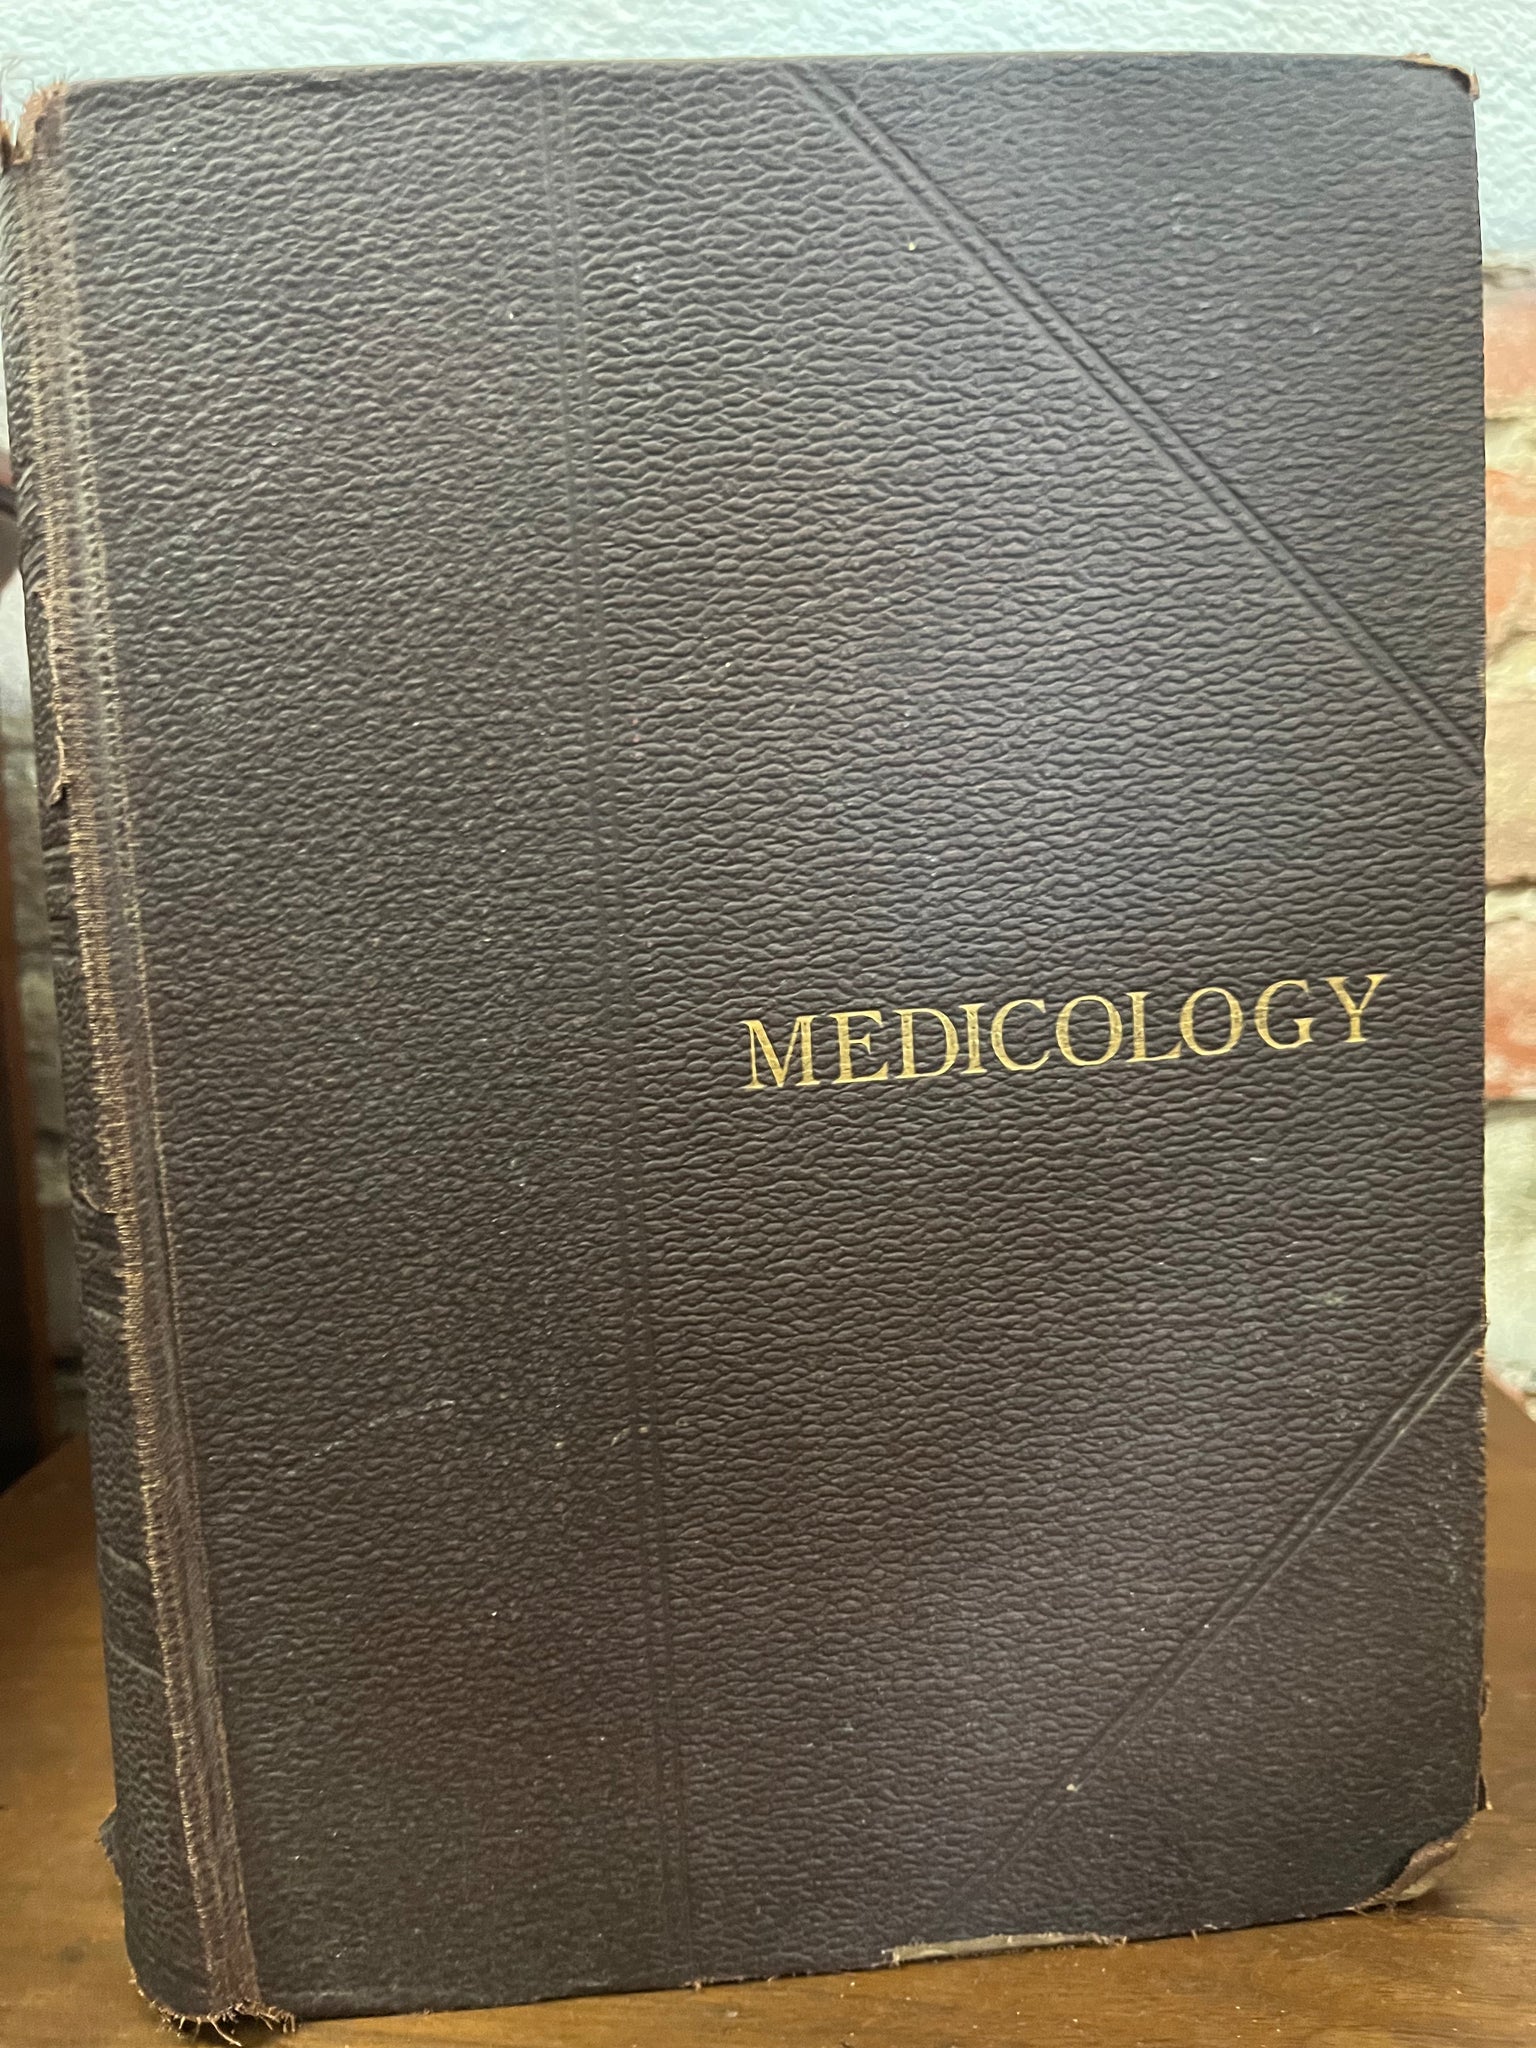 Medicology